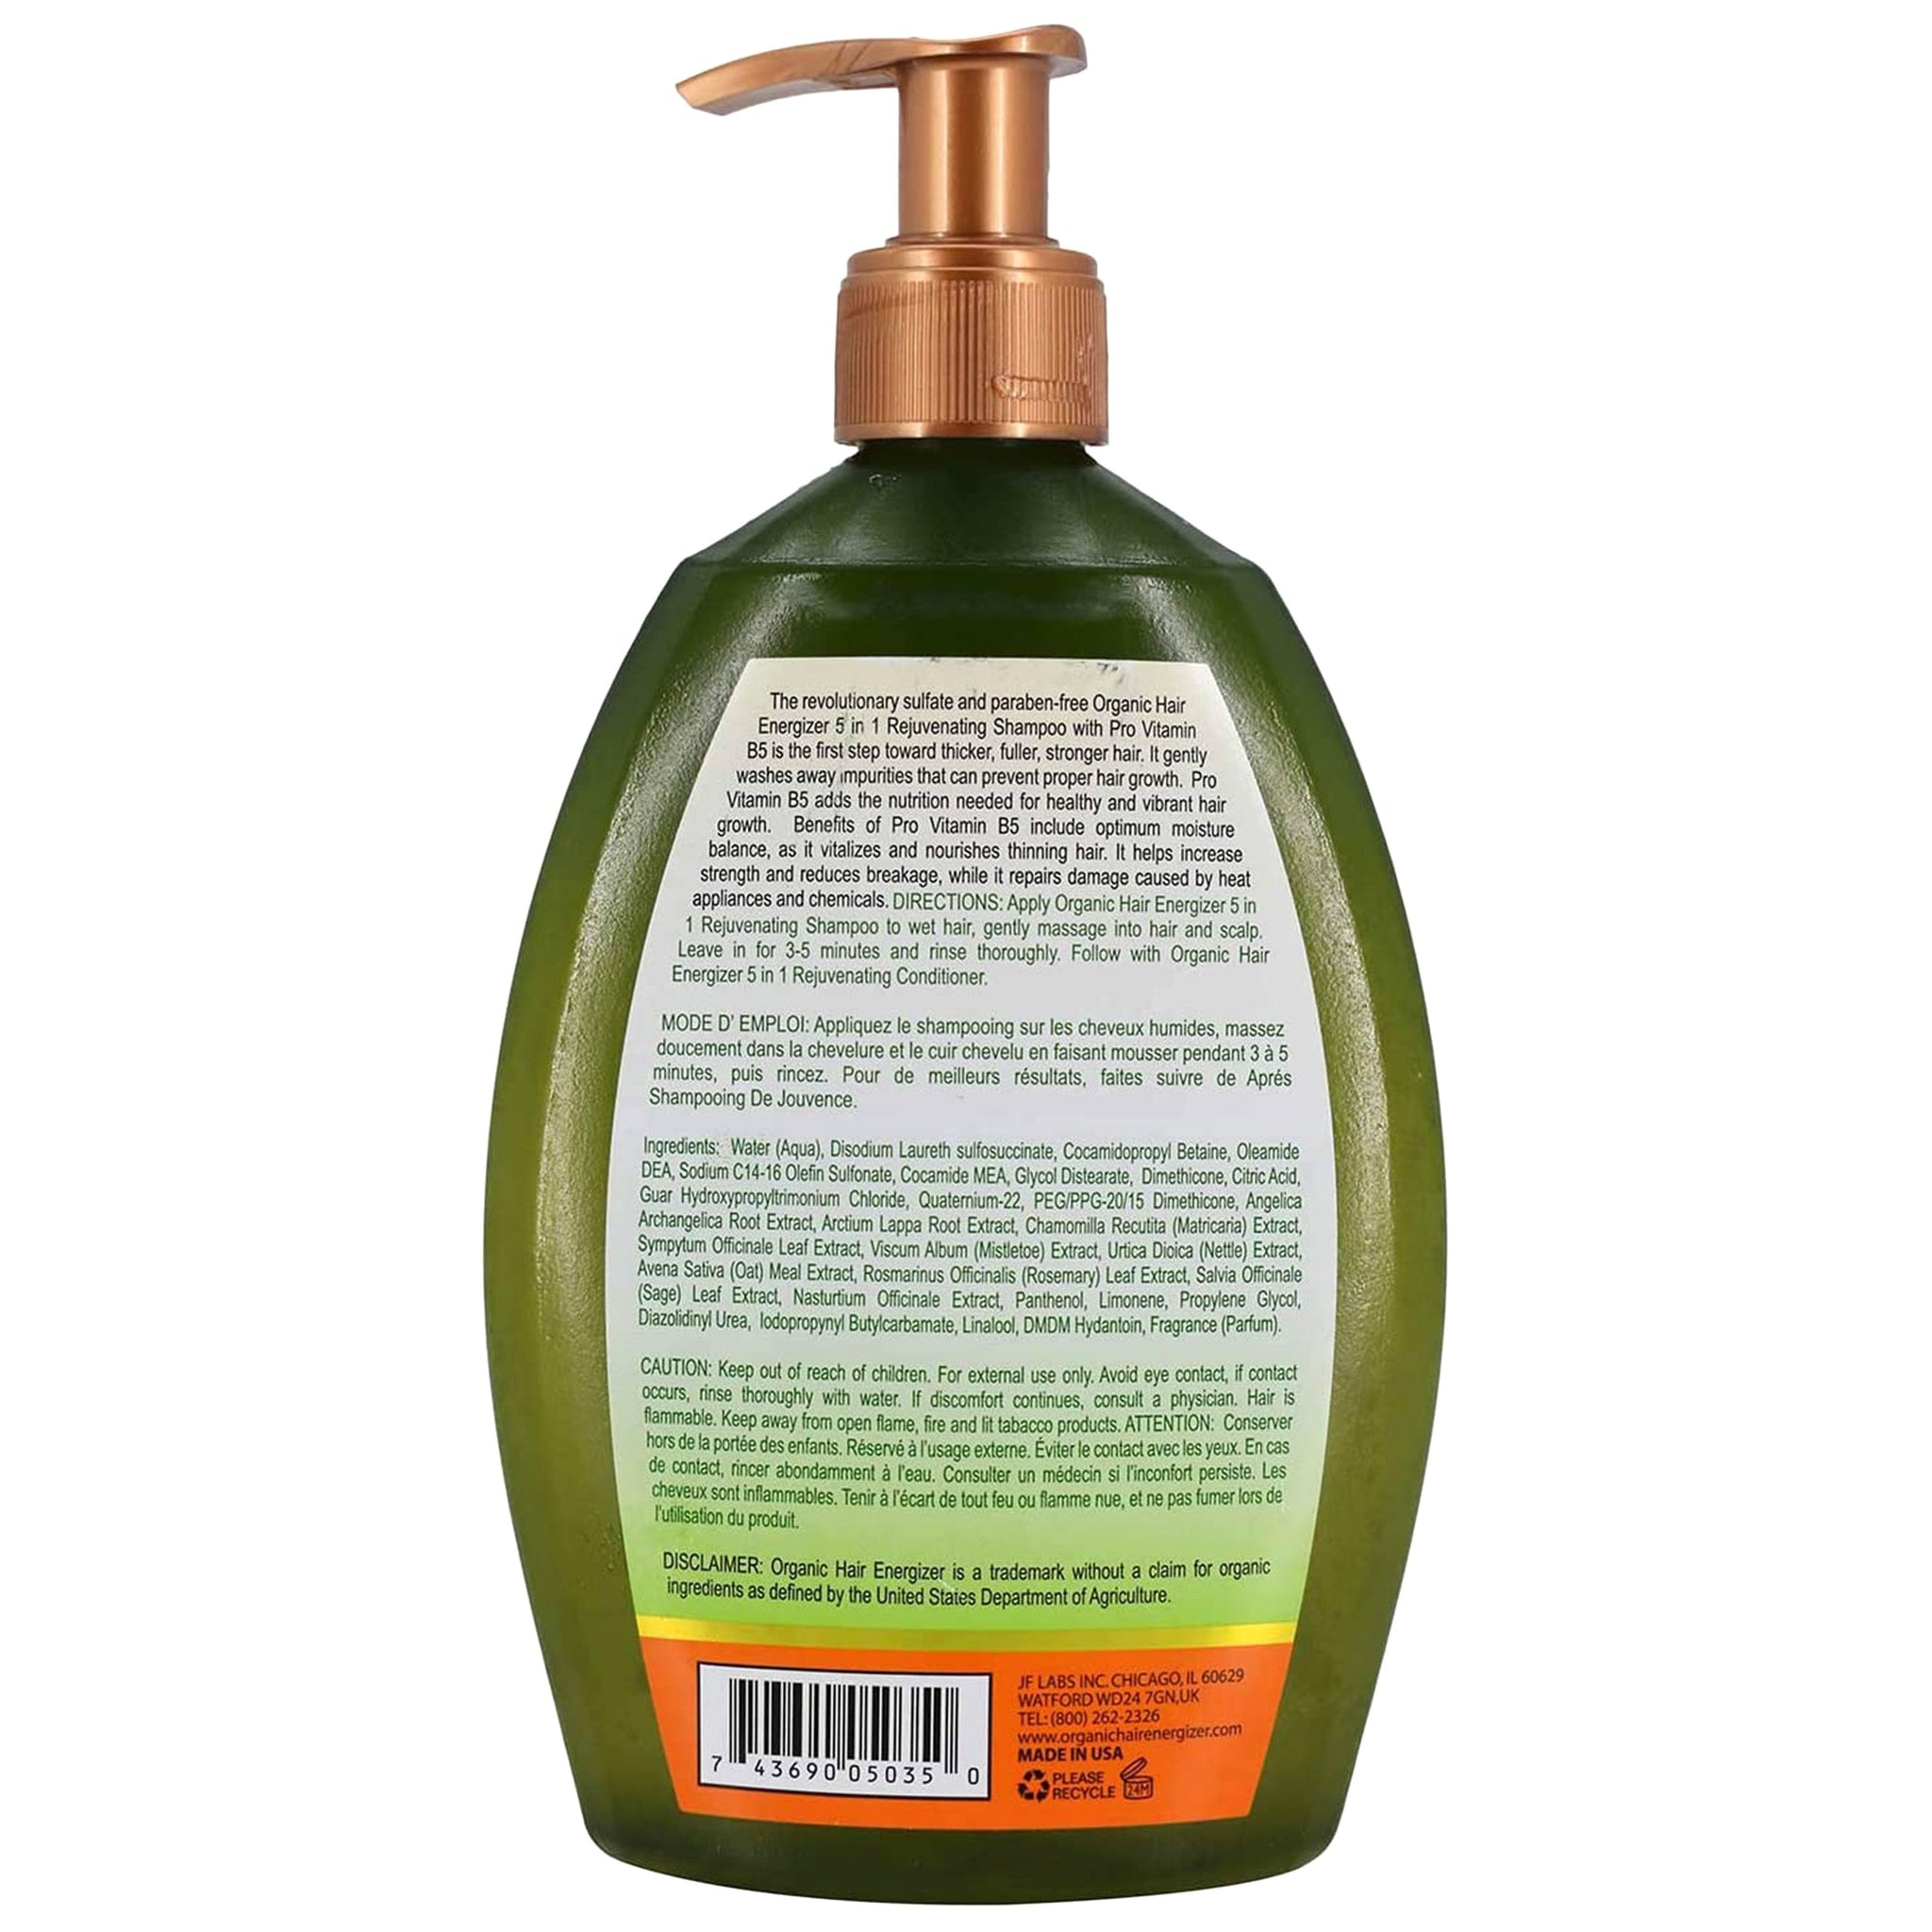 Organic Hair Energizer 5 in 1 Rejuvenating Shampoo 380ml